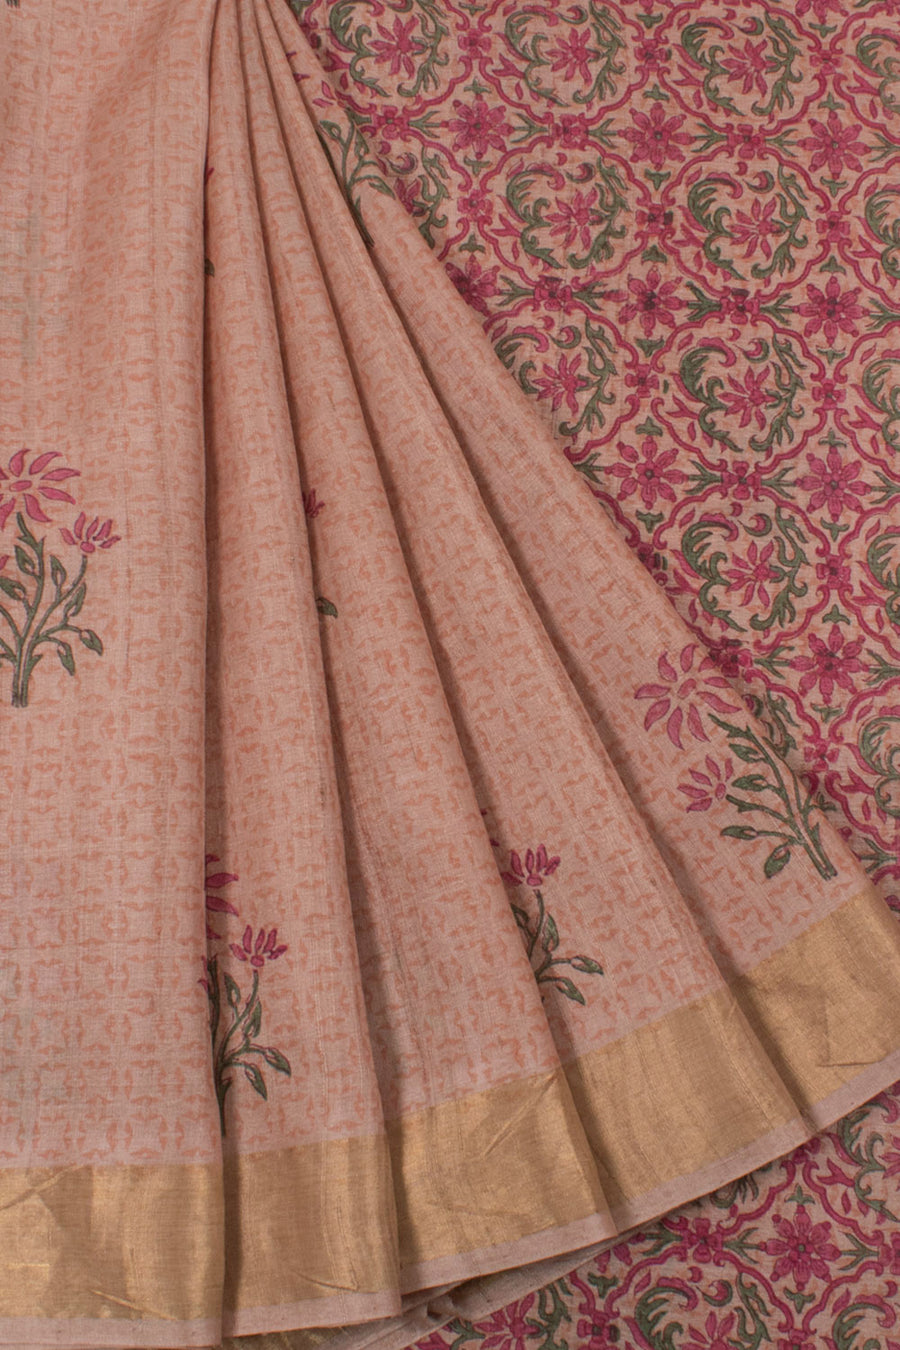 Hand Block Printed Tussar Silk Saree with Floral Motifs and Zari Border